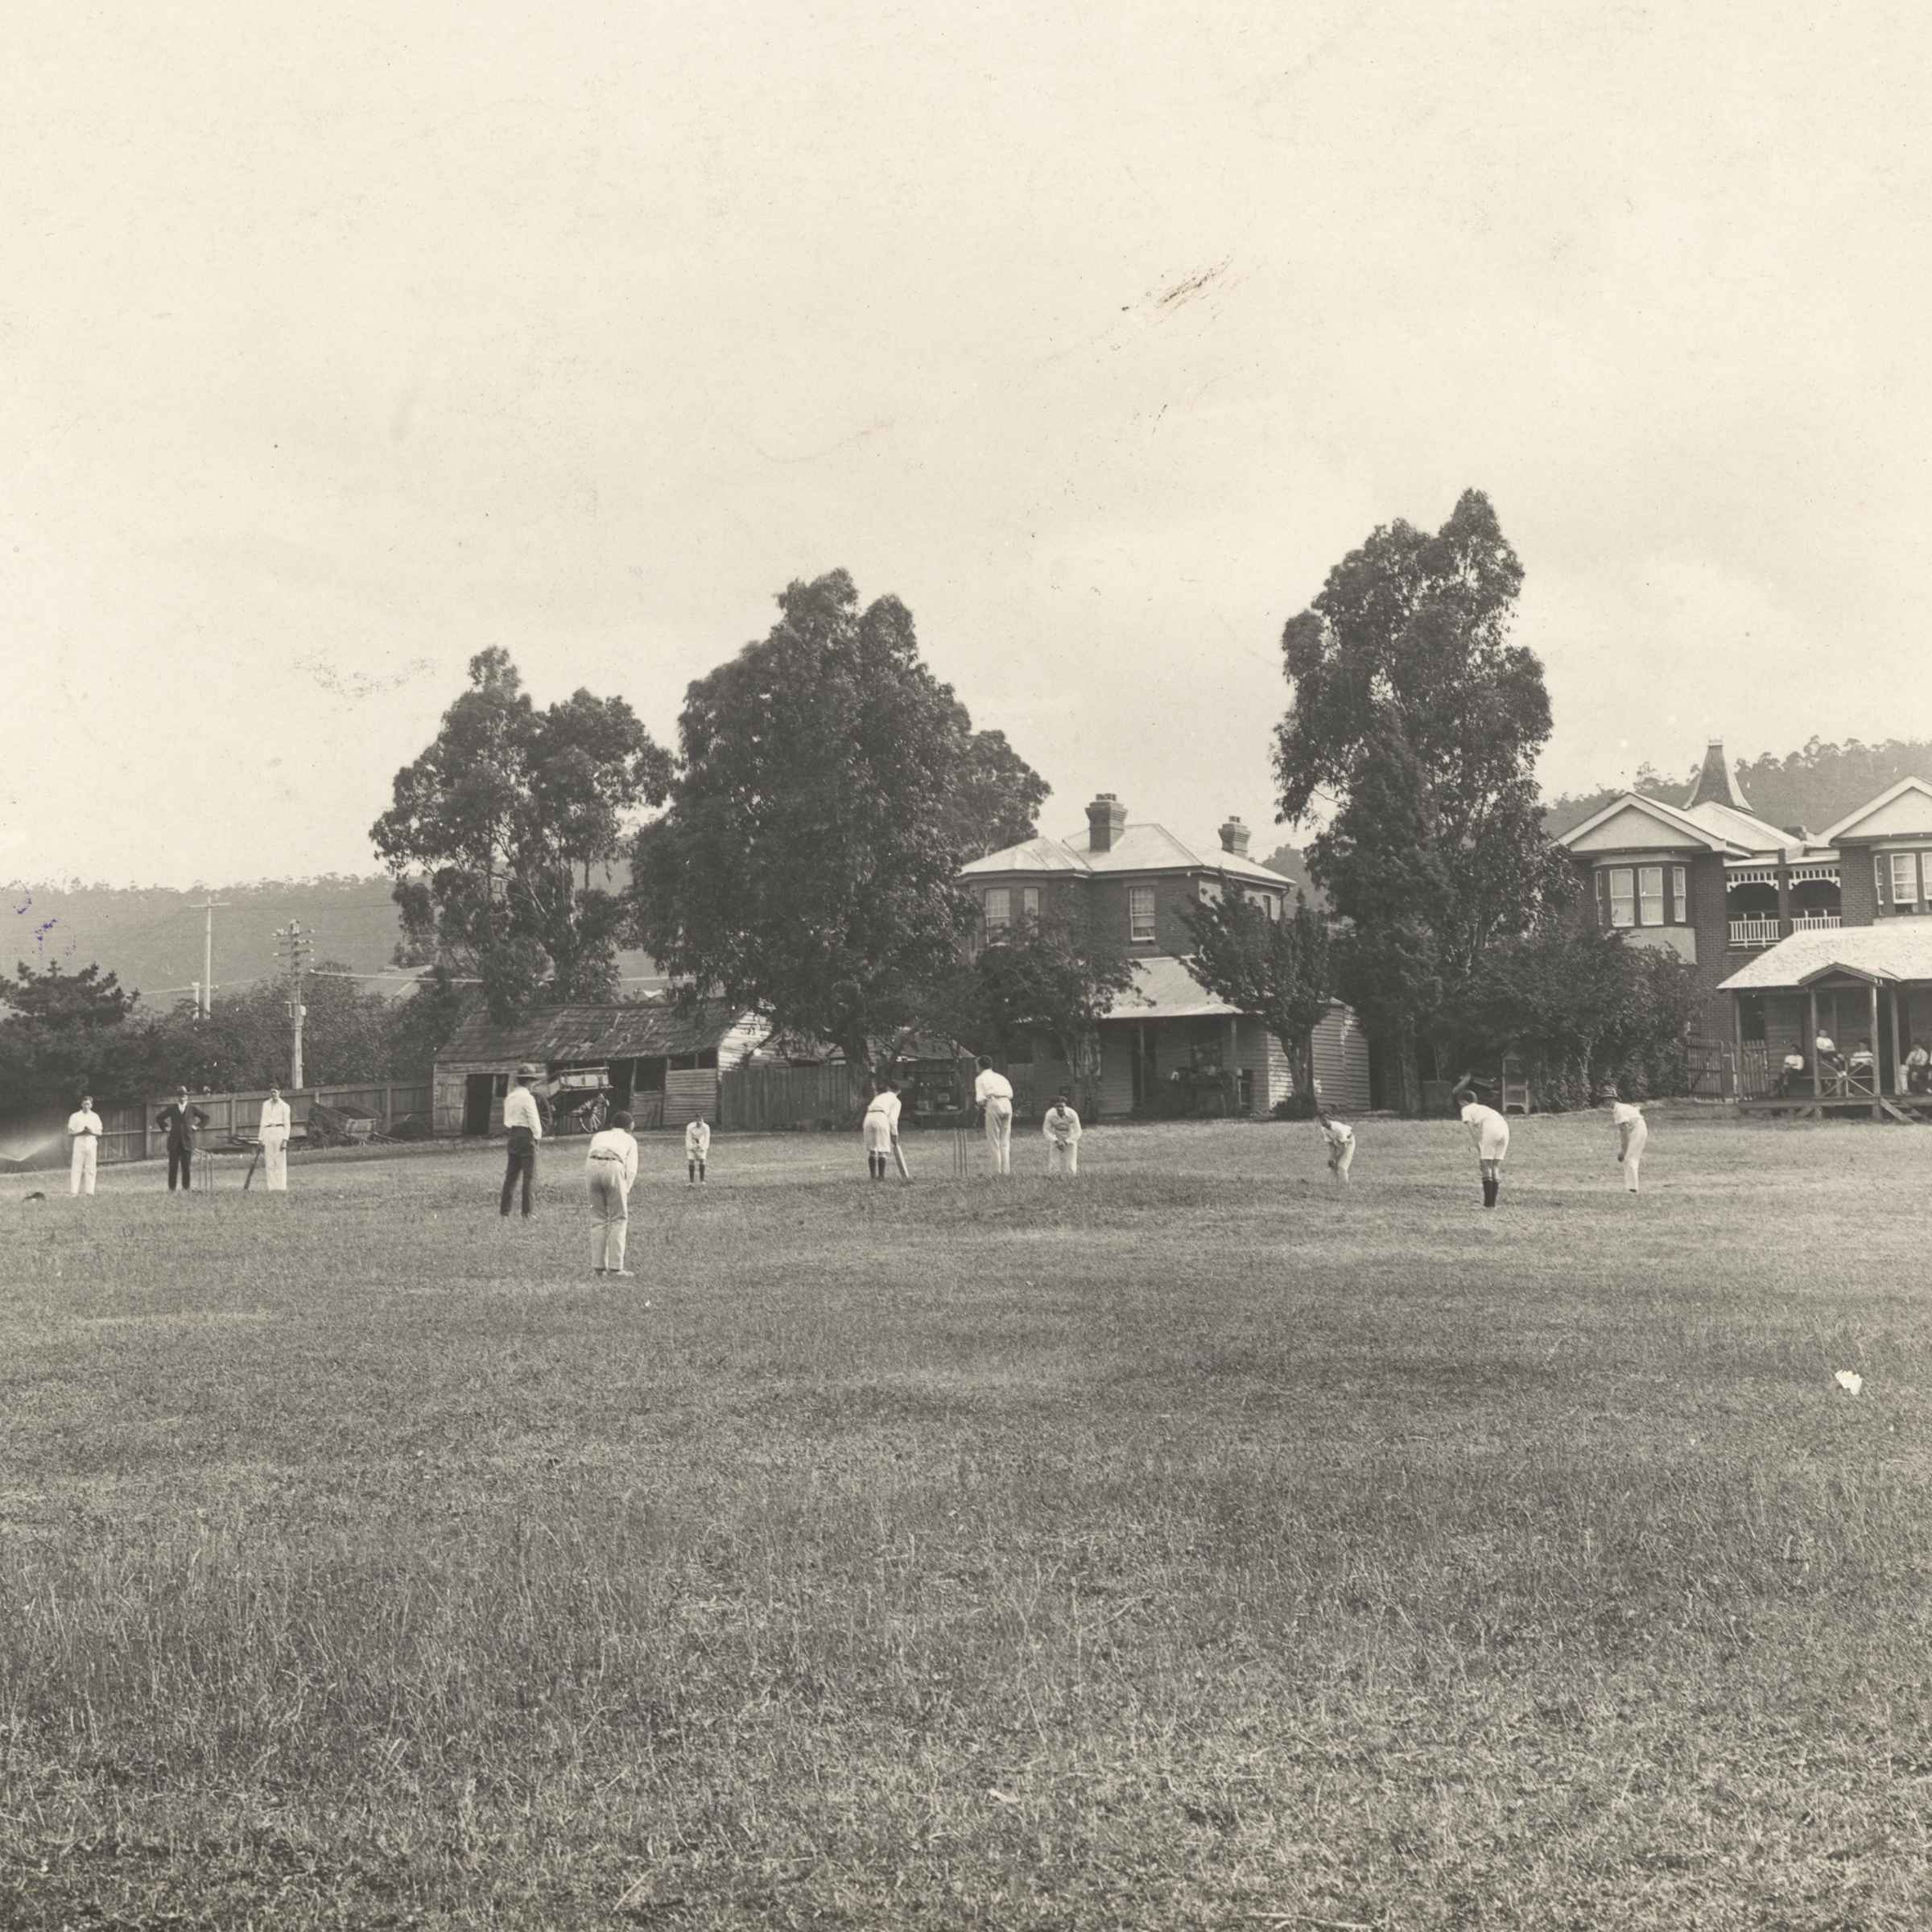 Cricket with C C Thorold (umpire), 1918.